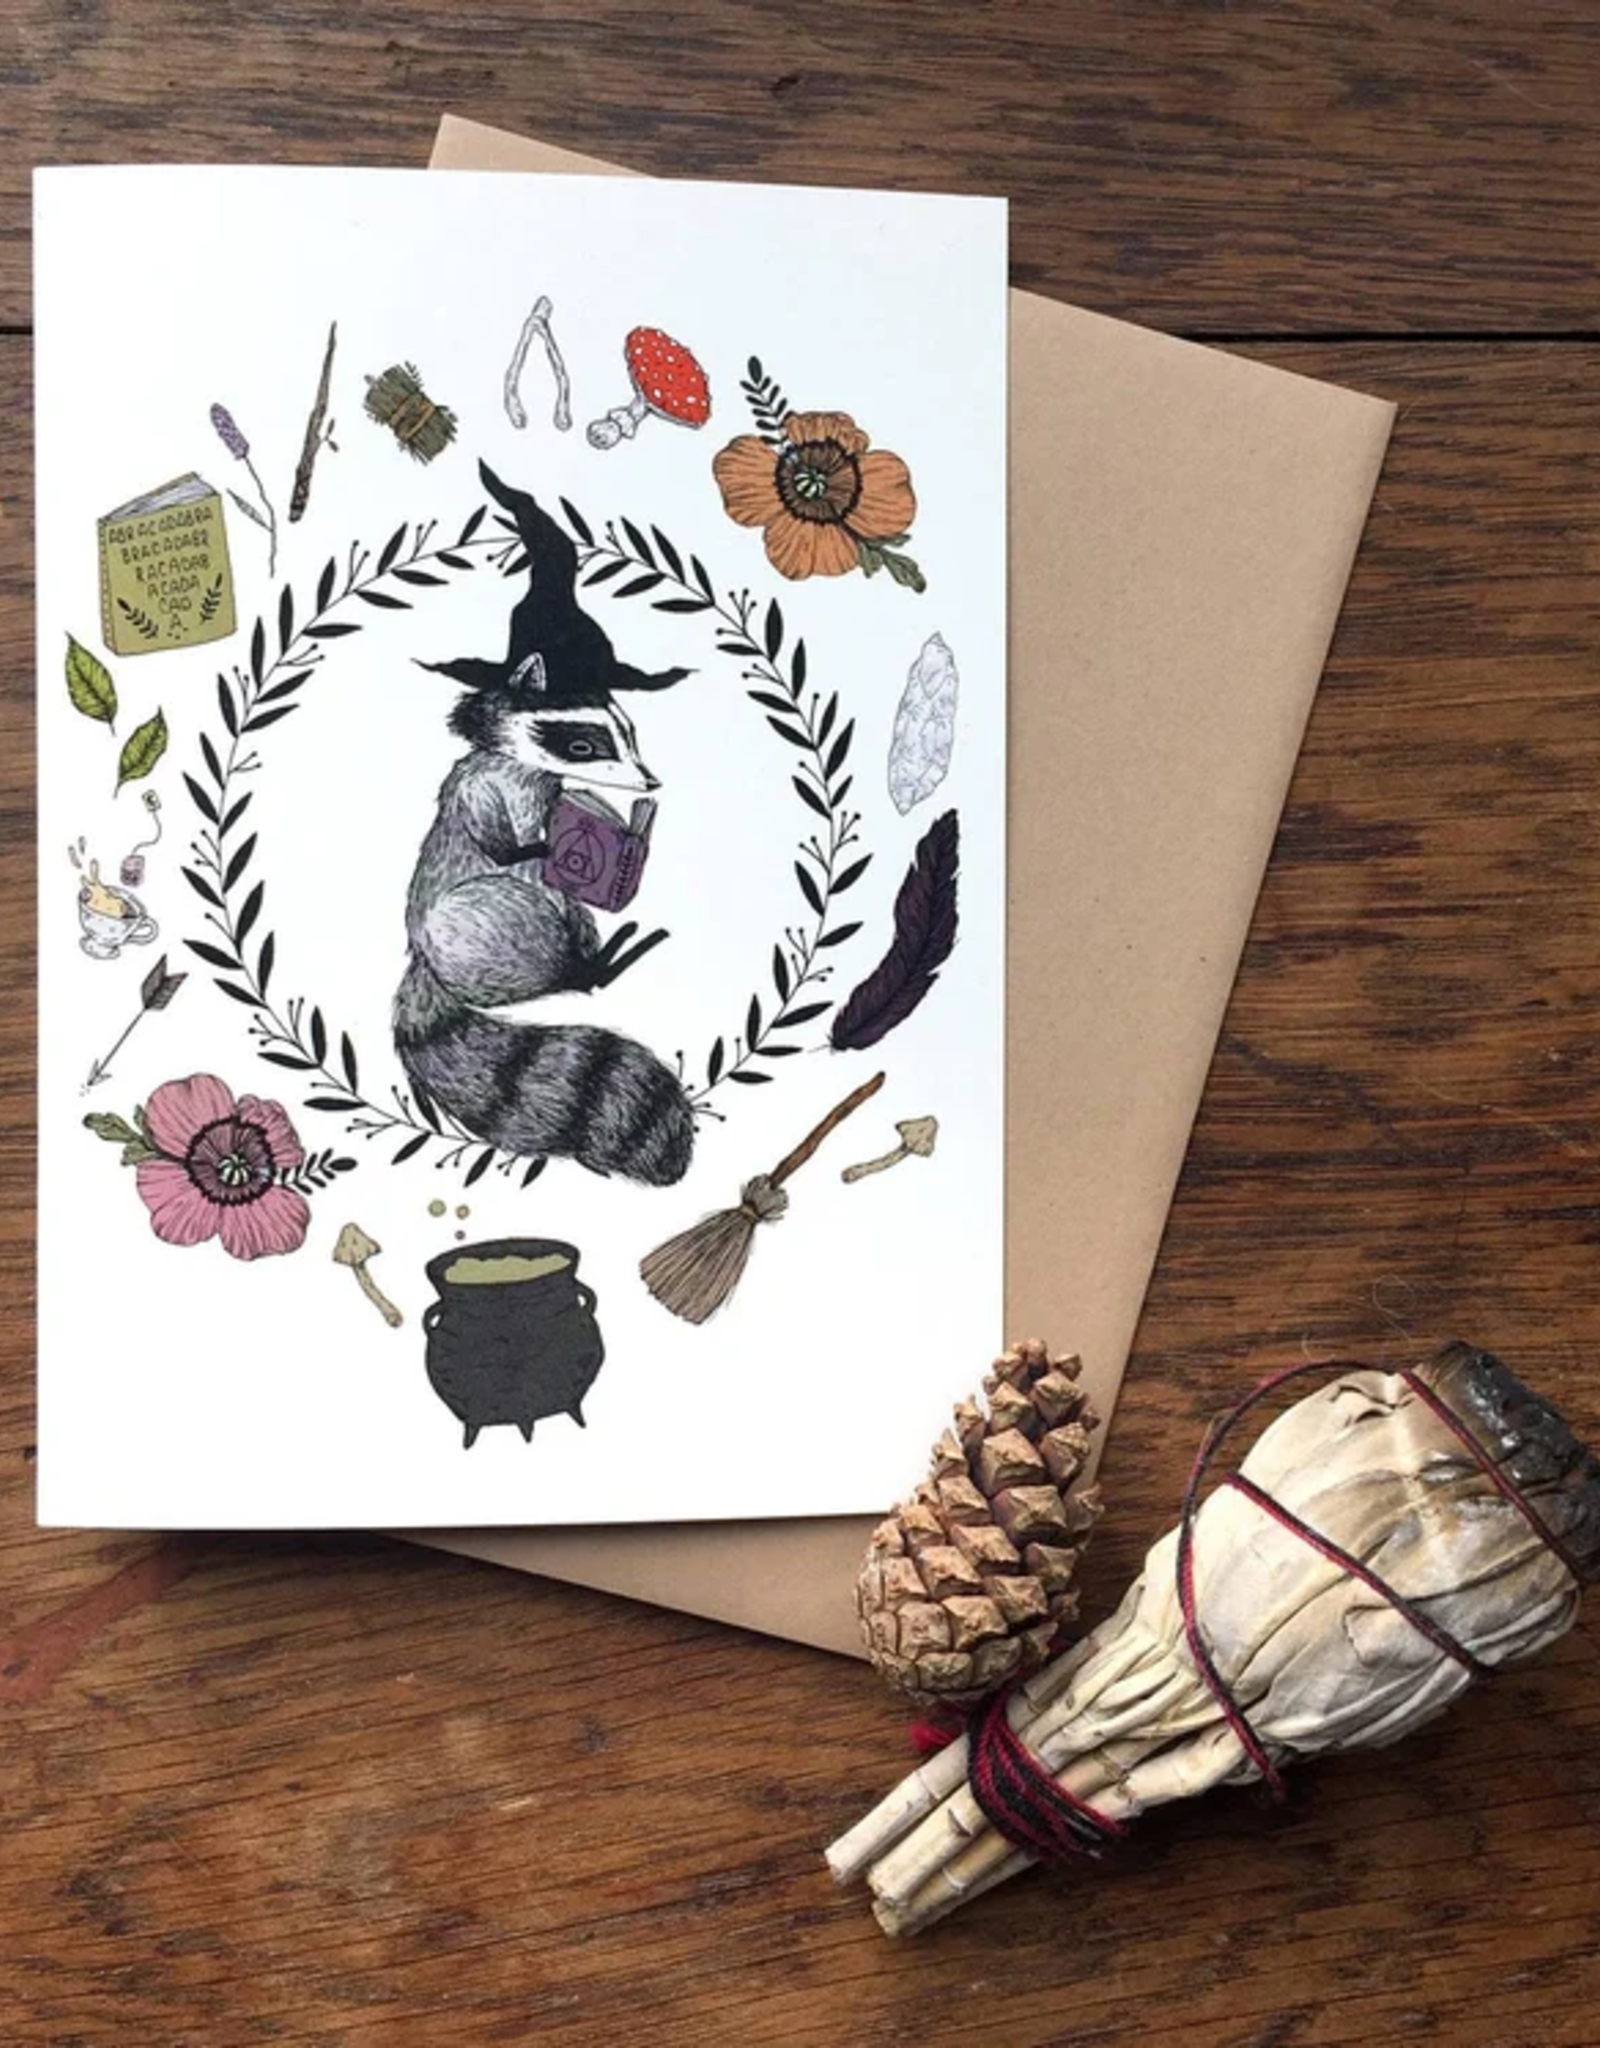 Marika Paz Illustration Magic Student Raccoon Greeting Card